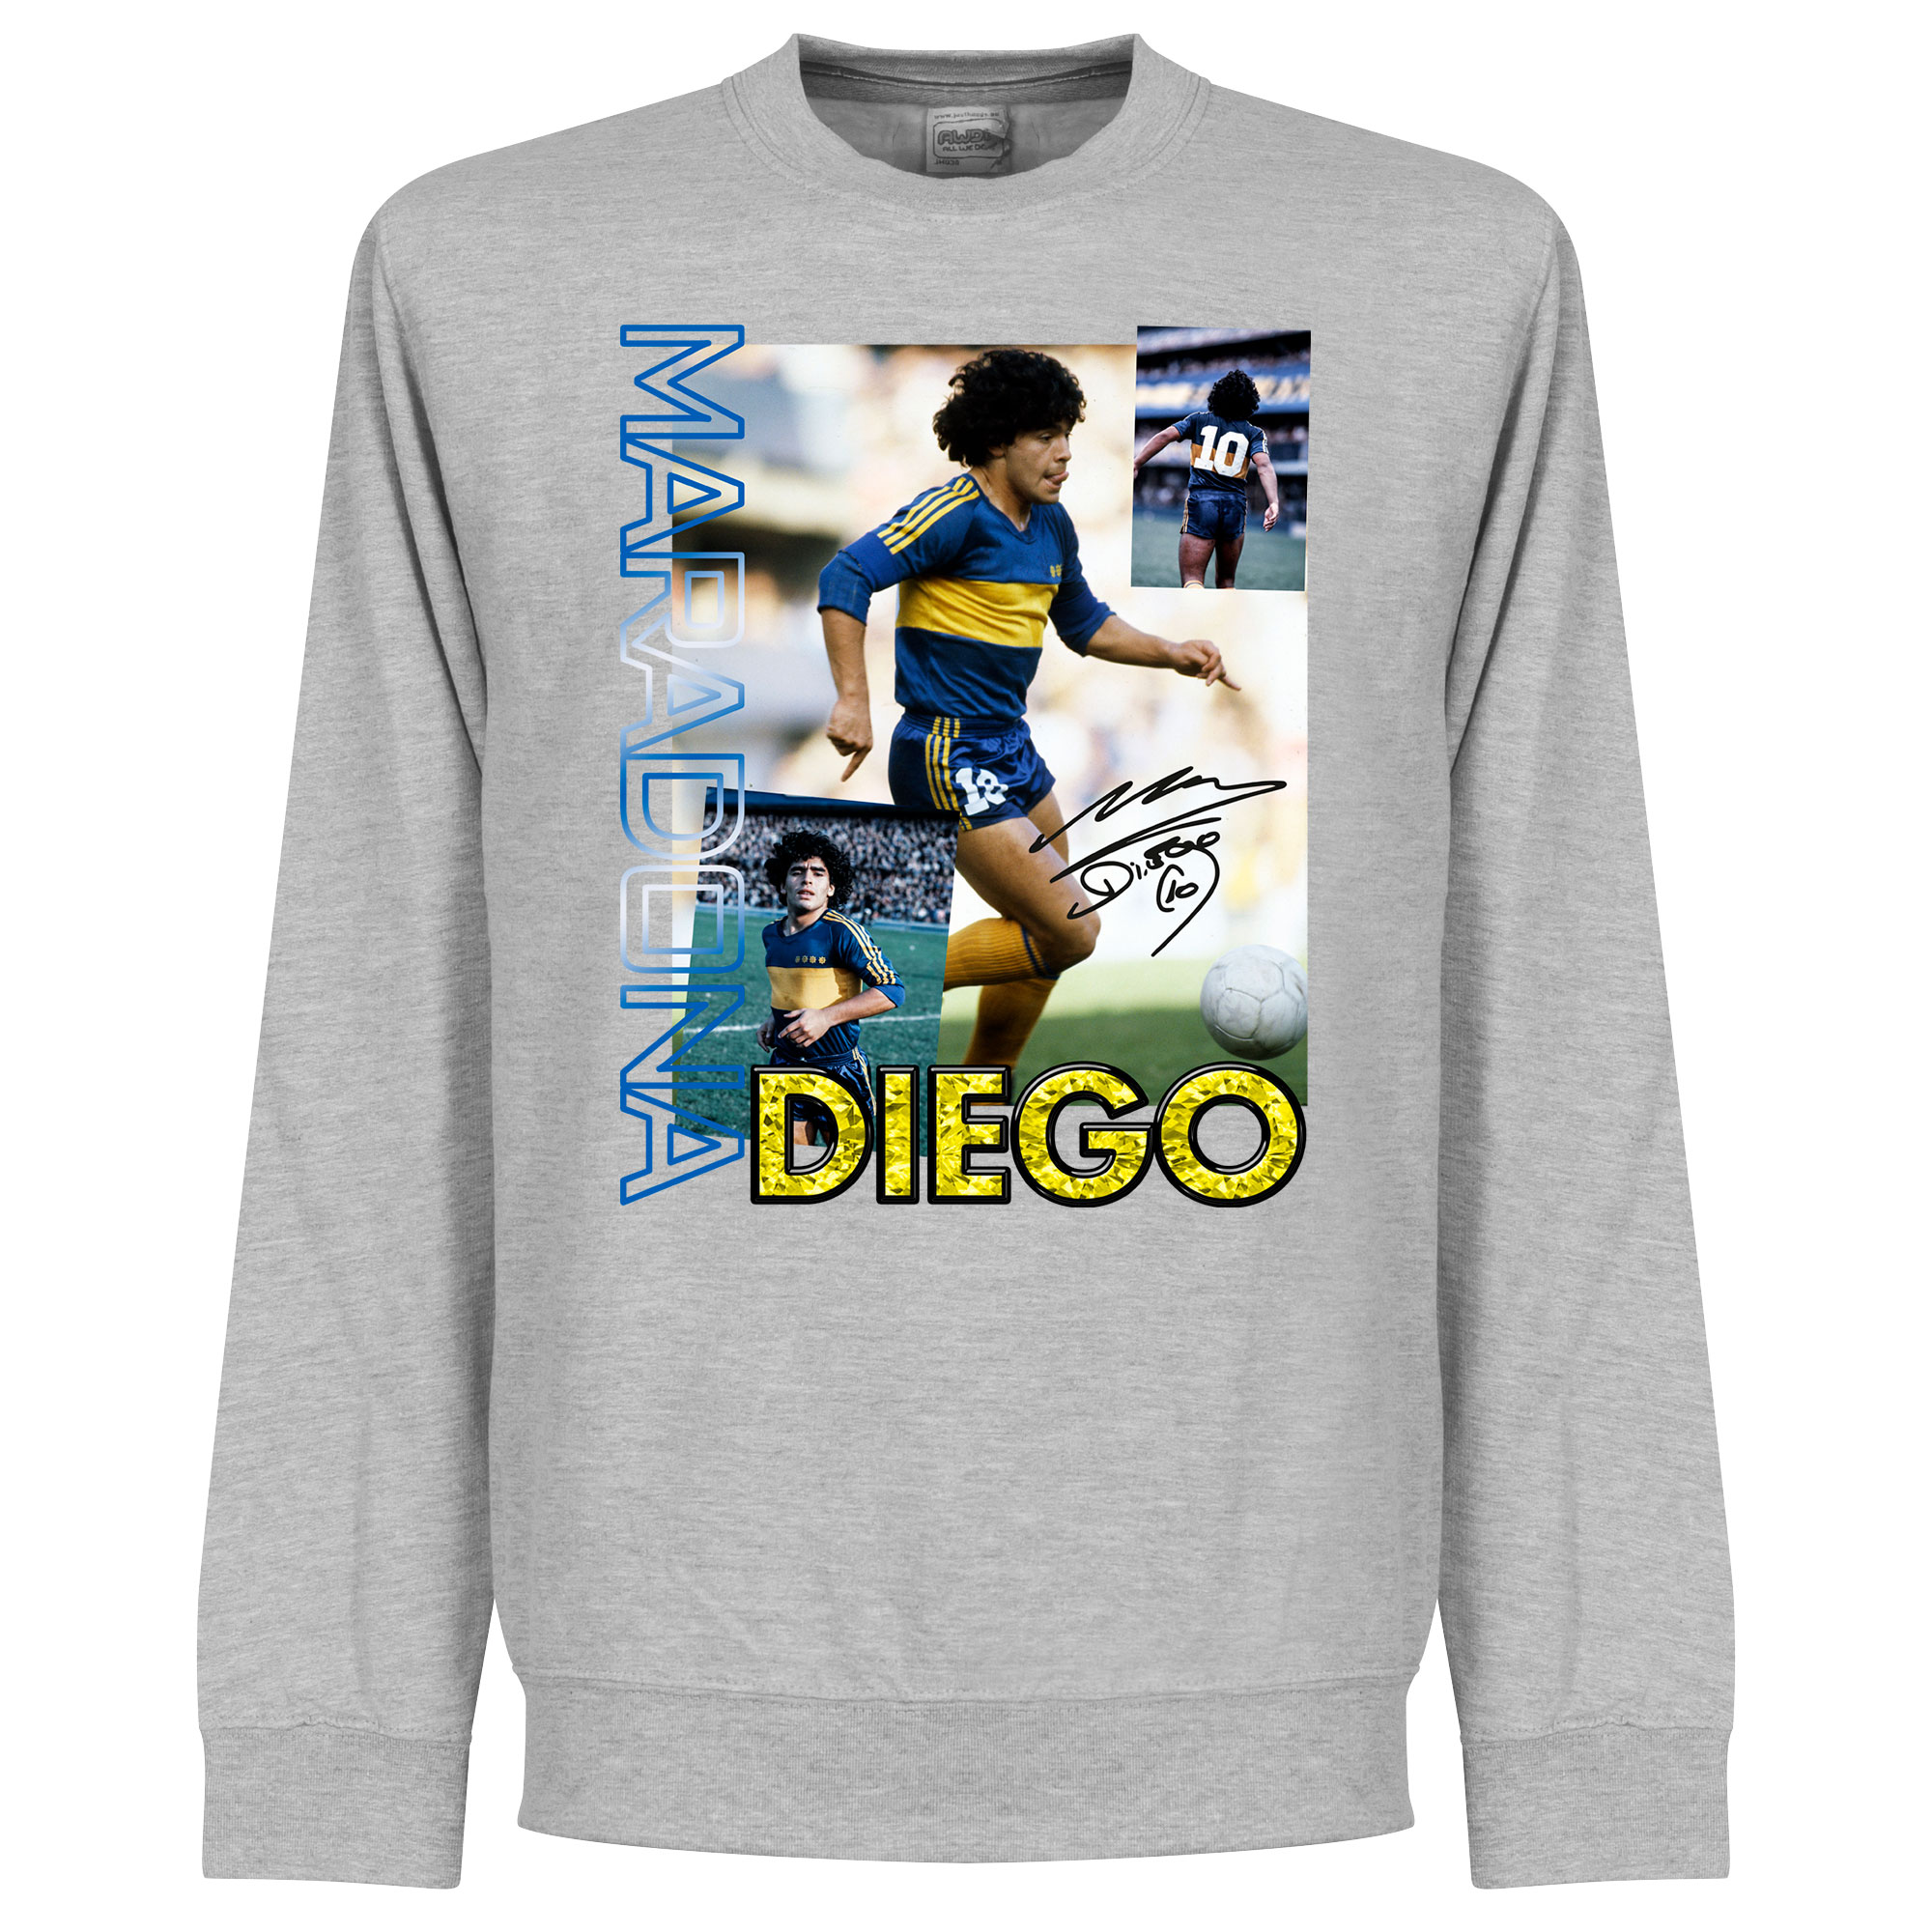 Diego Maradona Boca Old Skool Sweater - Grijs